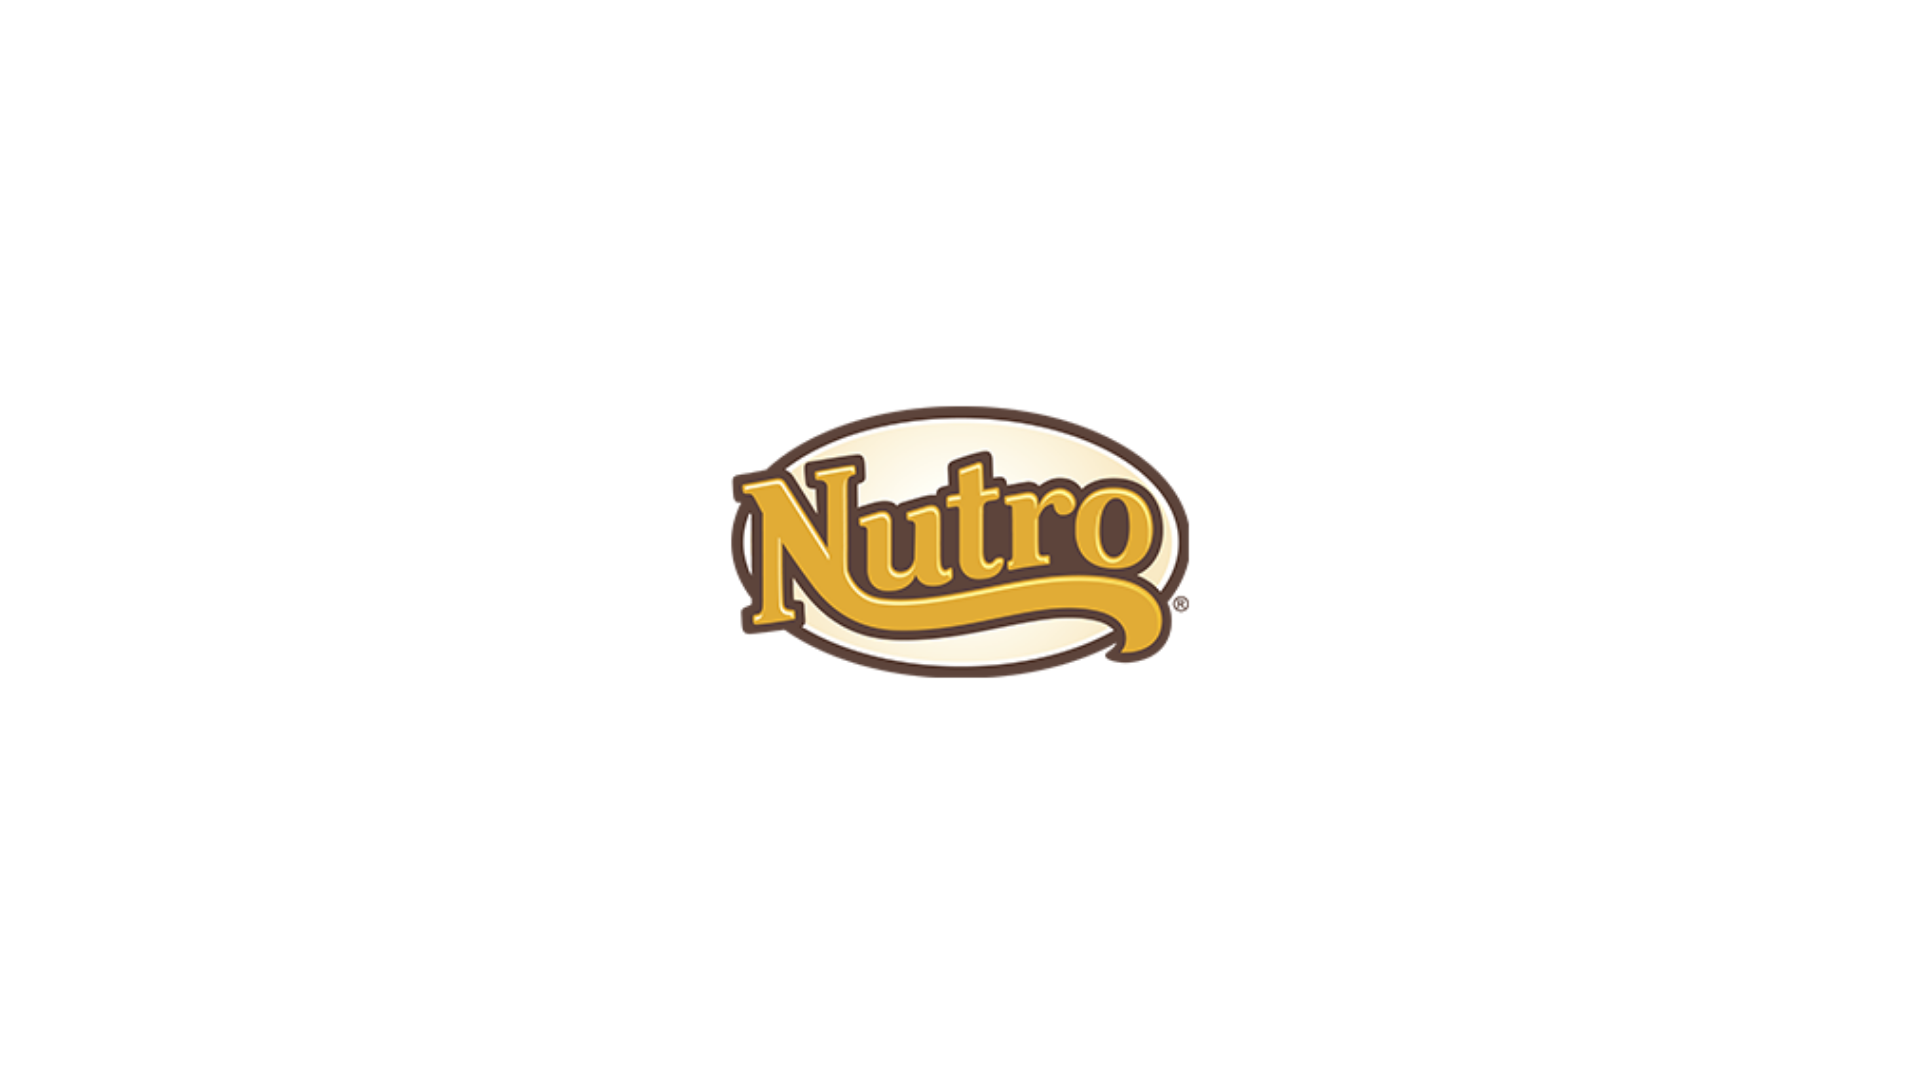 Nutro logo.png